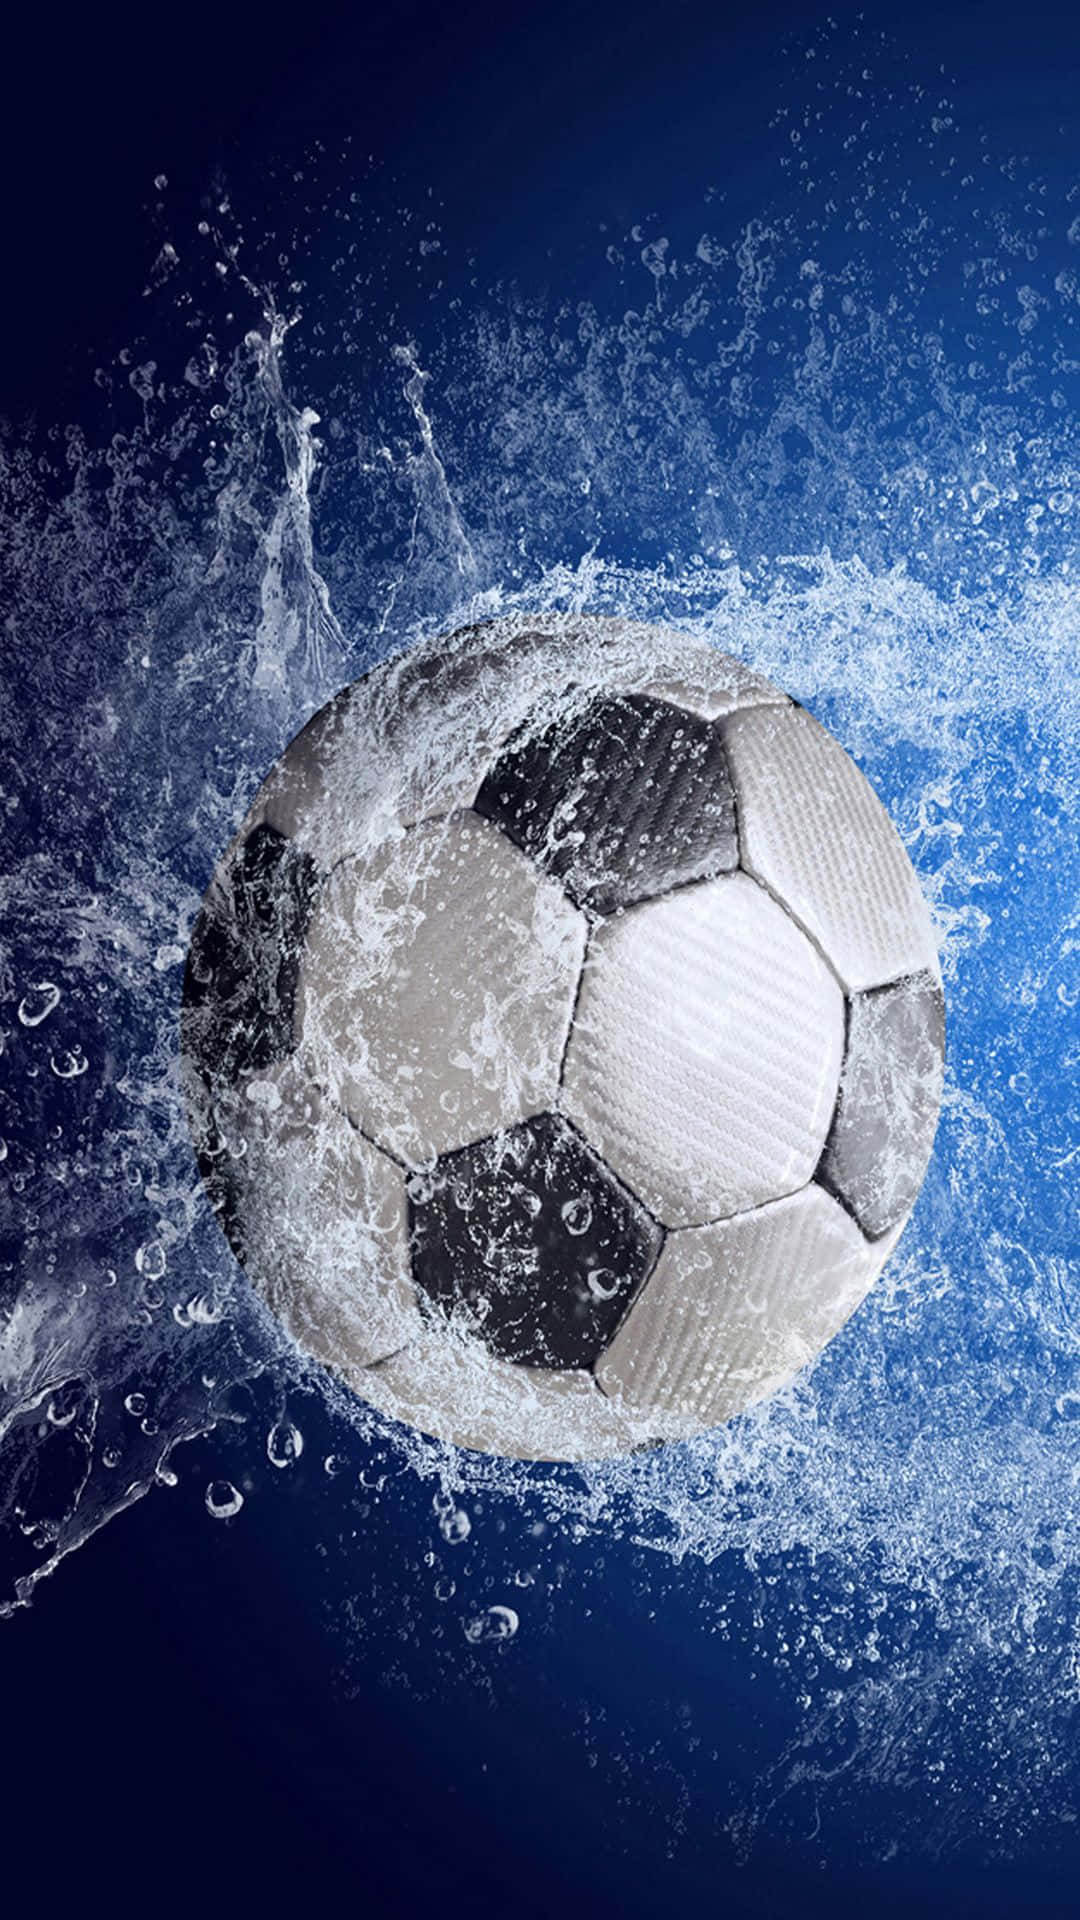 Football Galaxy Ball With Splash Of Water Wallpaper